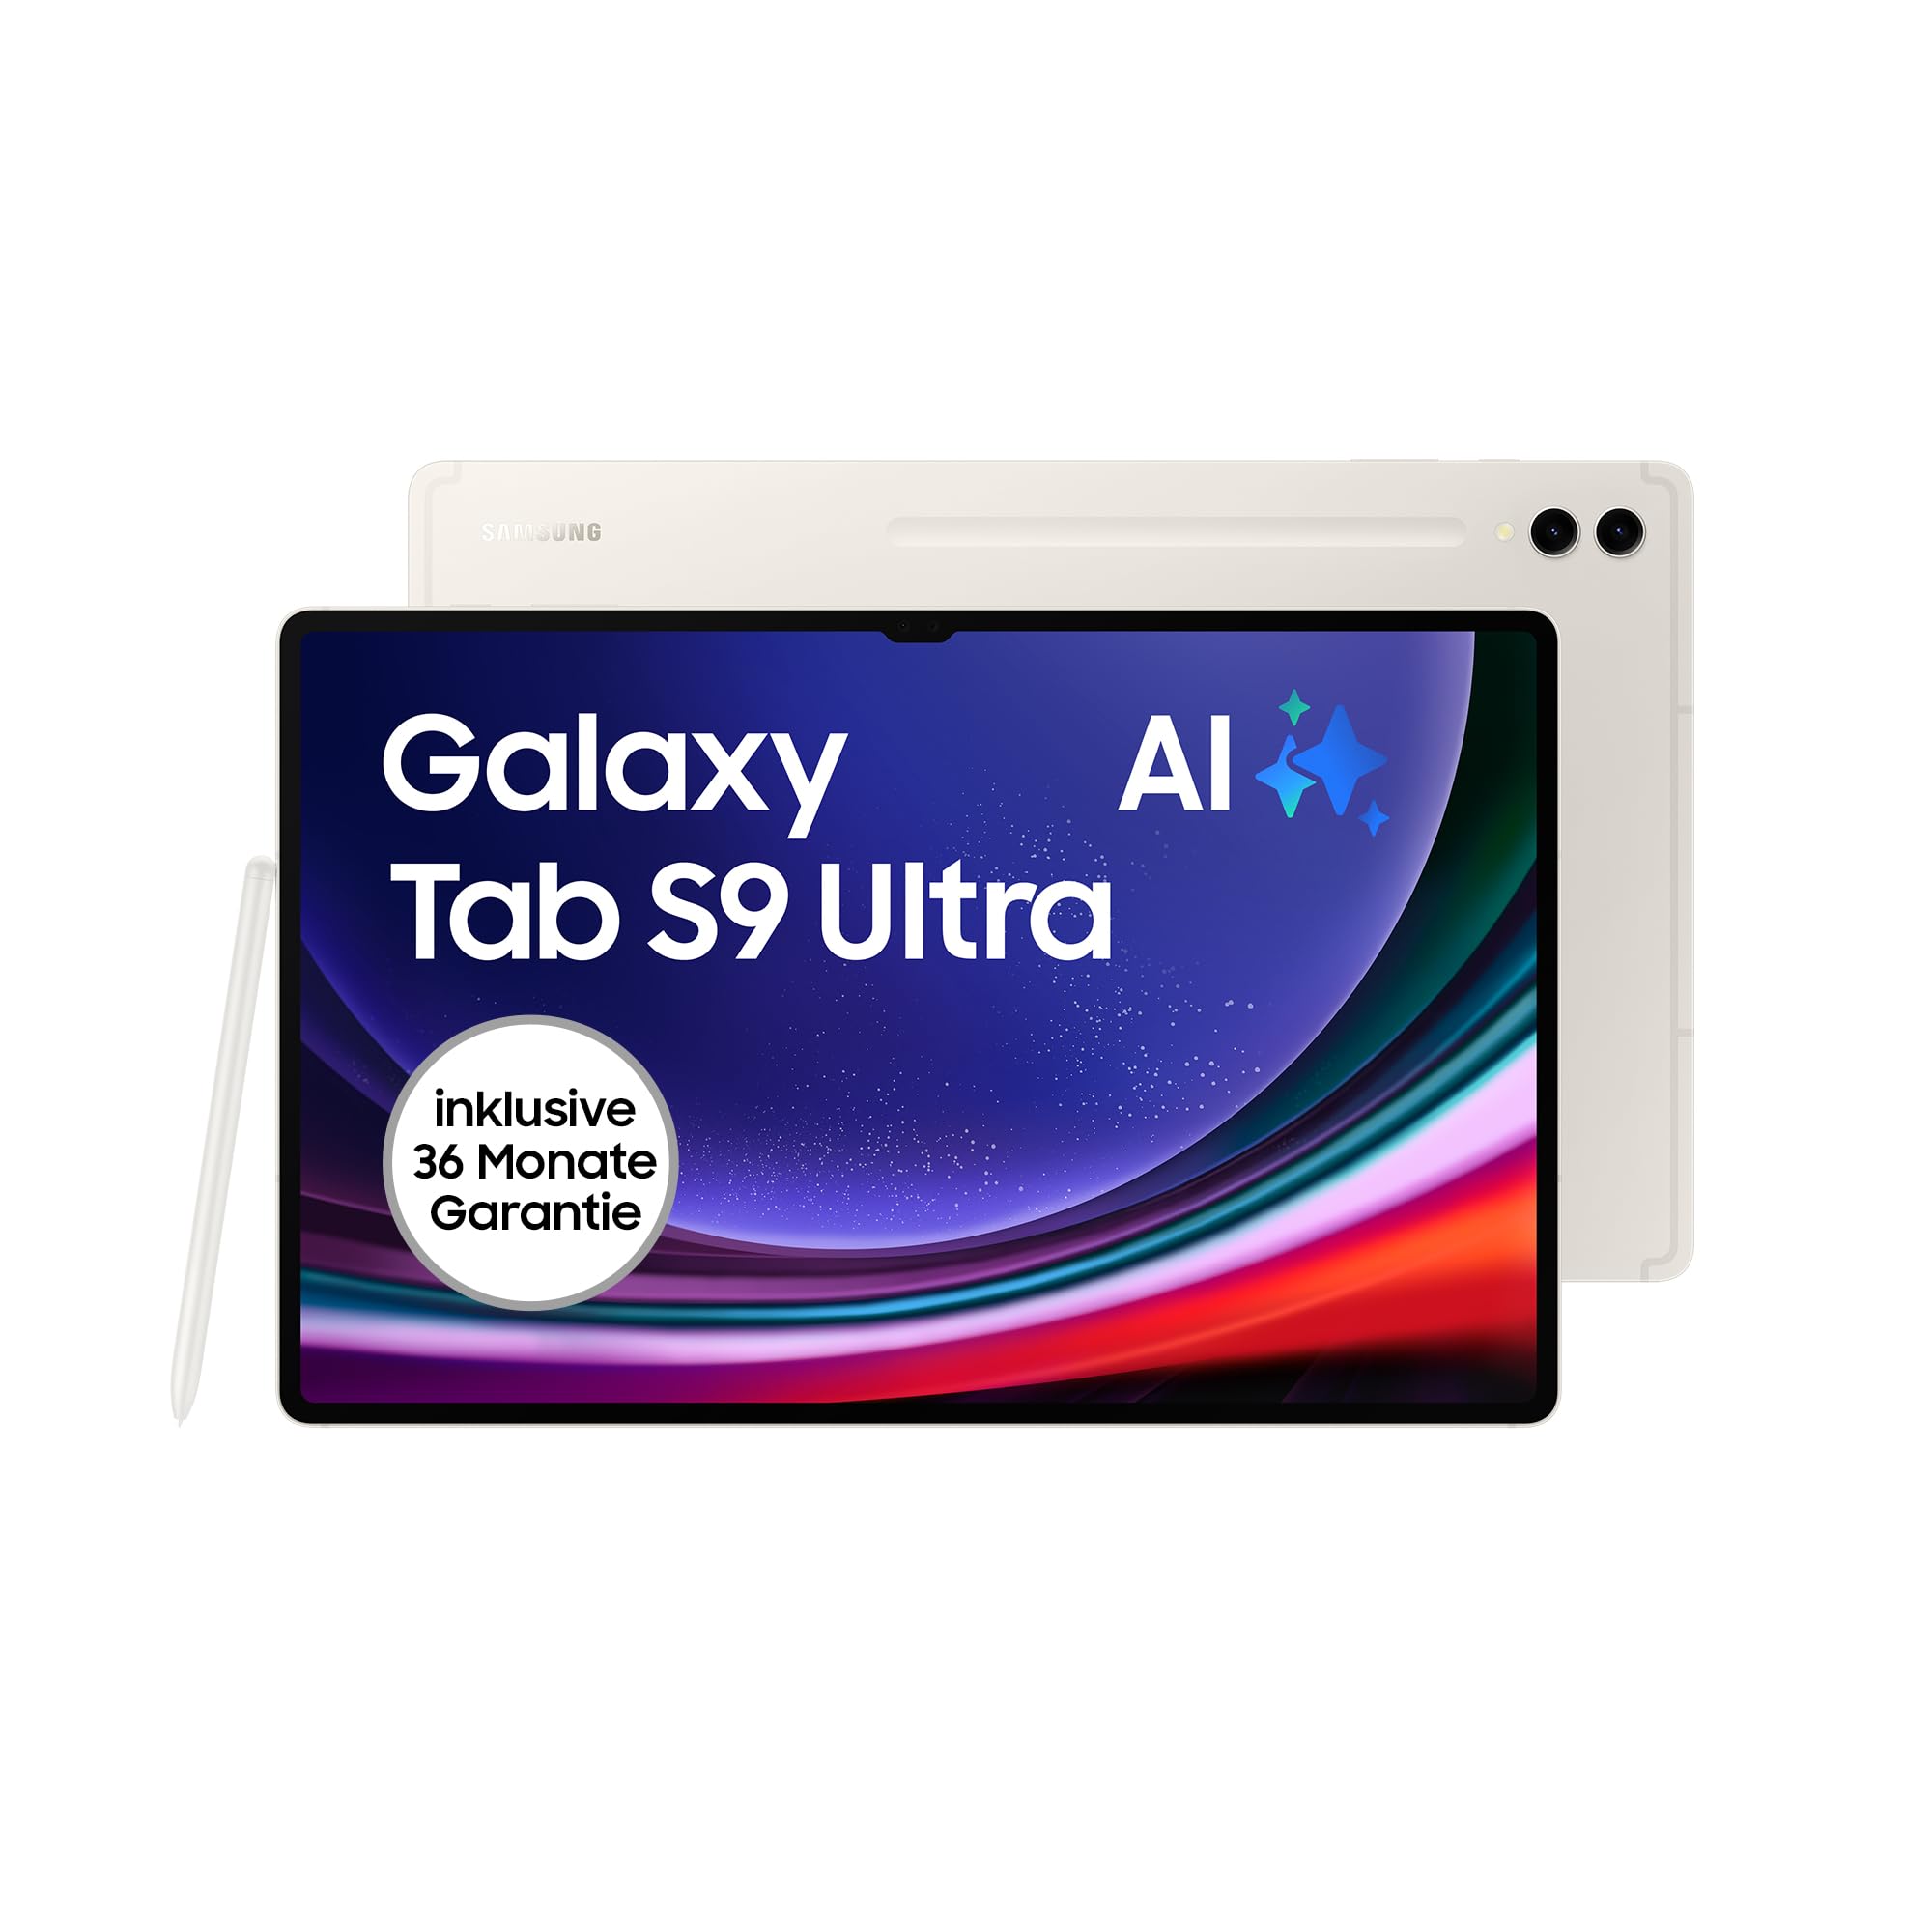 Samsung Galaxy Tab S9 Ultra Android-Tablet, Wi-Fi, 1 TB / 16 GB RAM, MicroSD-Kartenslot, Inkl. S Pen, Simlockfrei ohne Vertrag, Beige, Inkl. 36 Monate Herstellergarantie